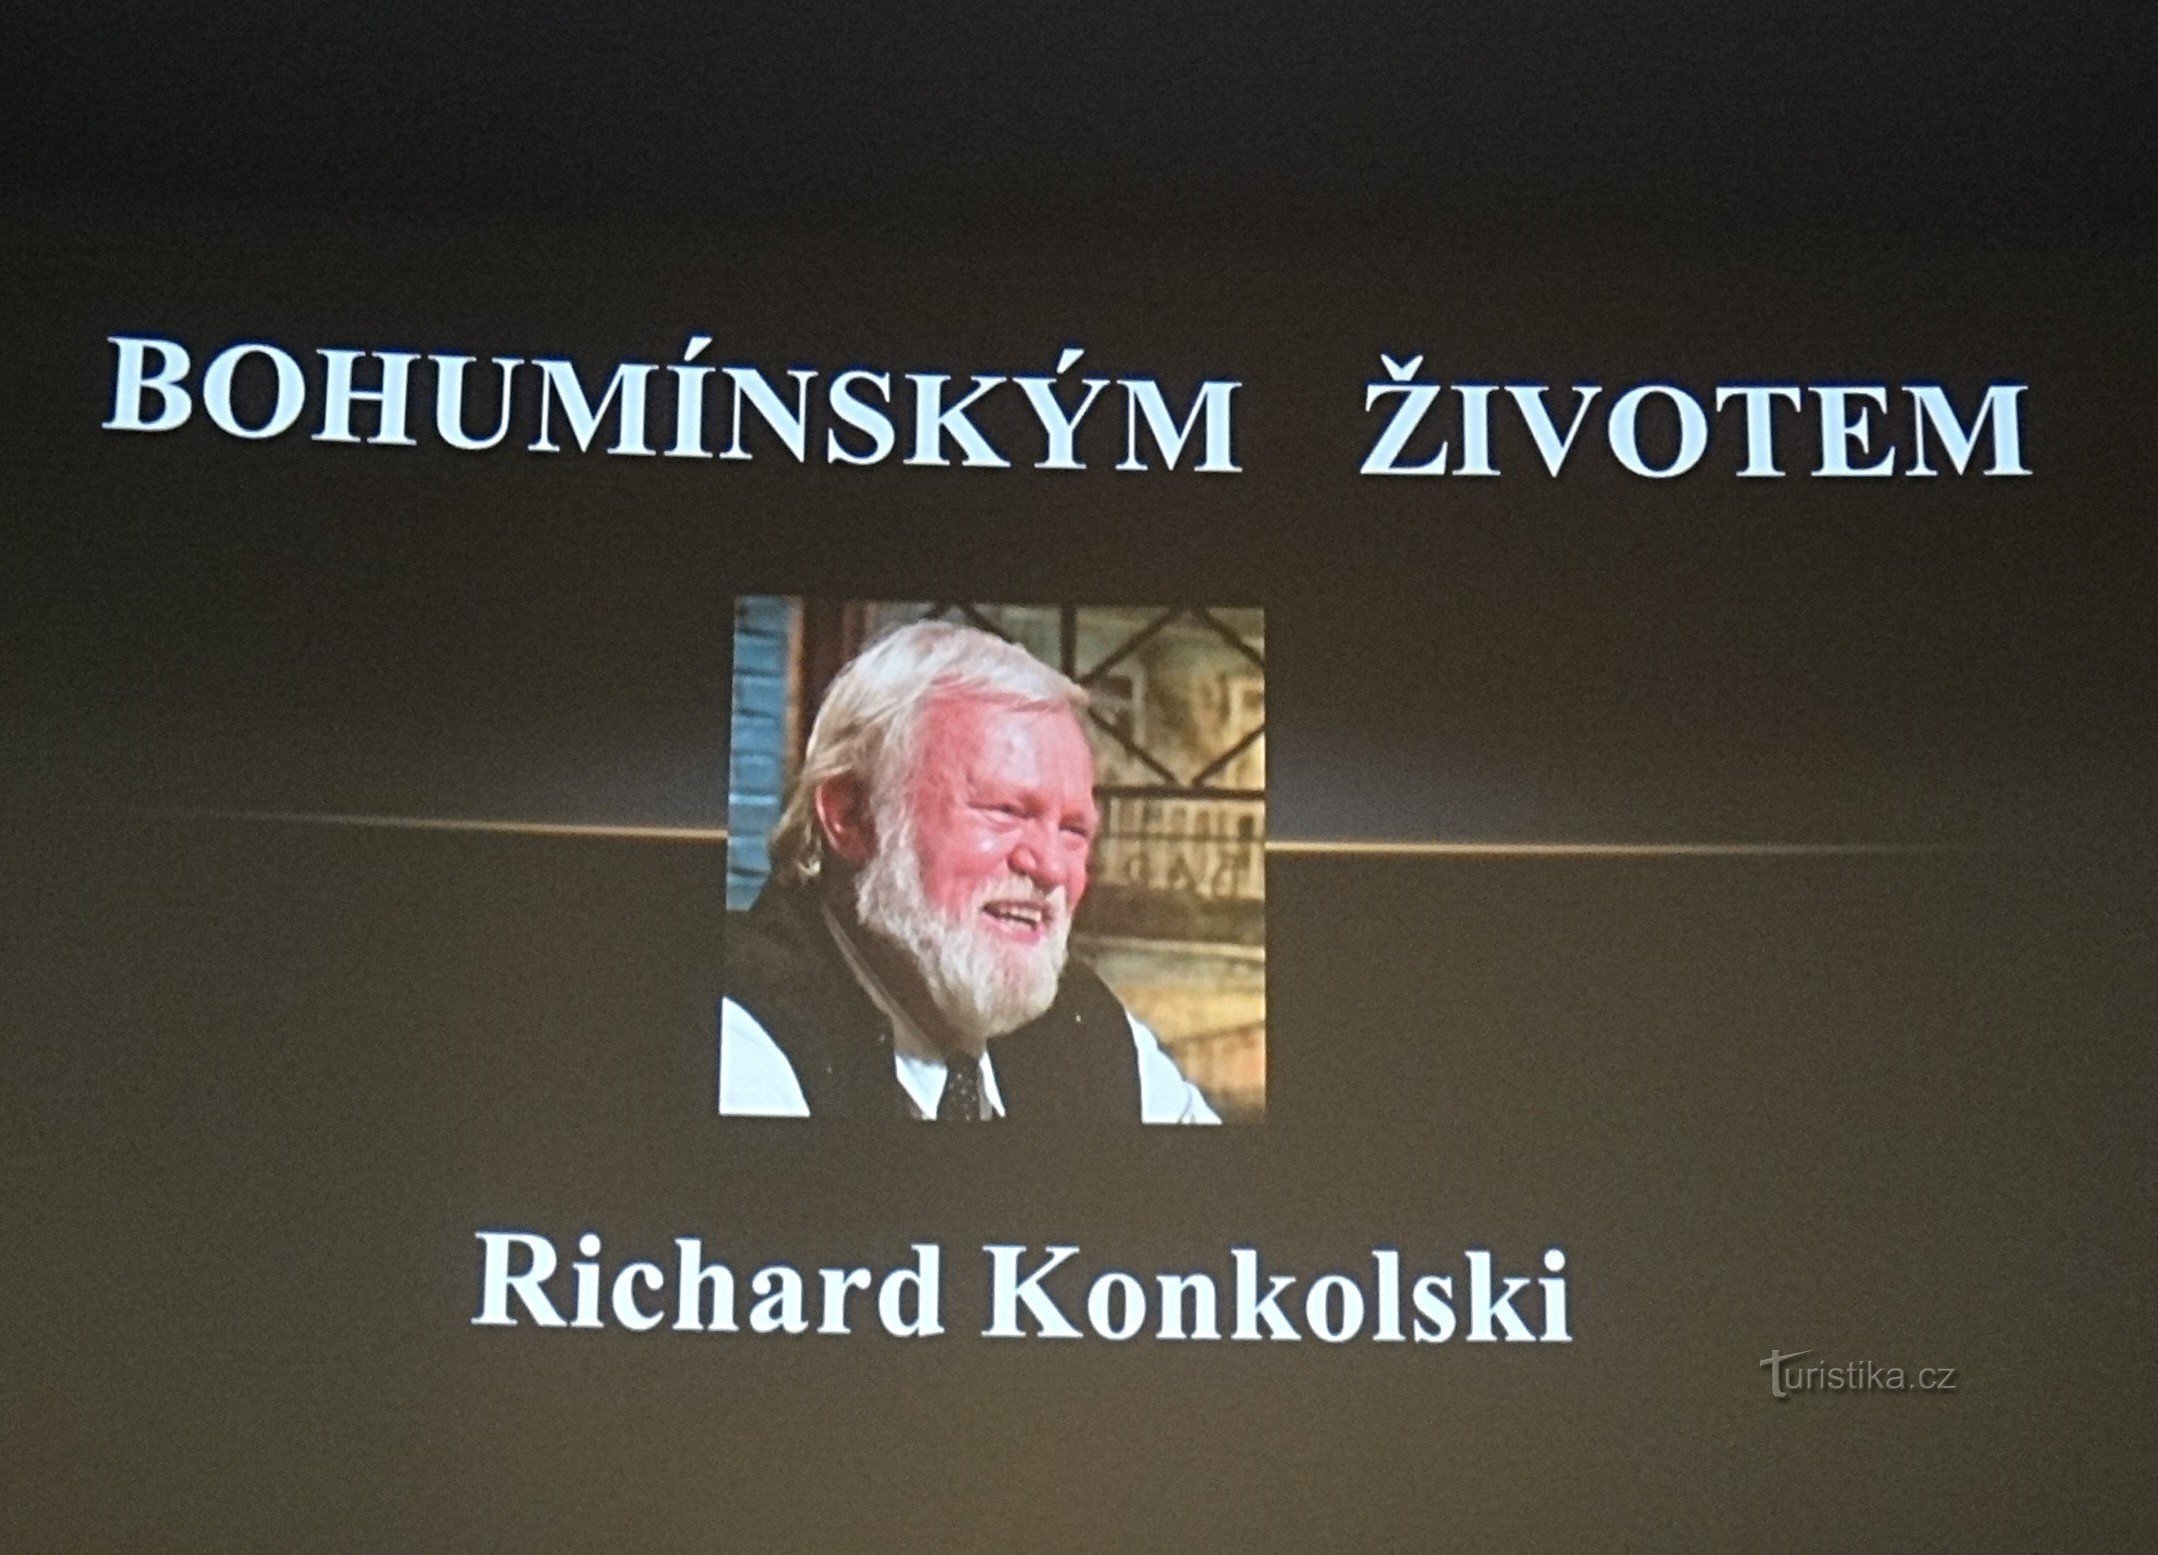 Richard Konkolski puhuu elokuvateatterissa